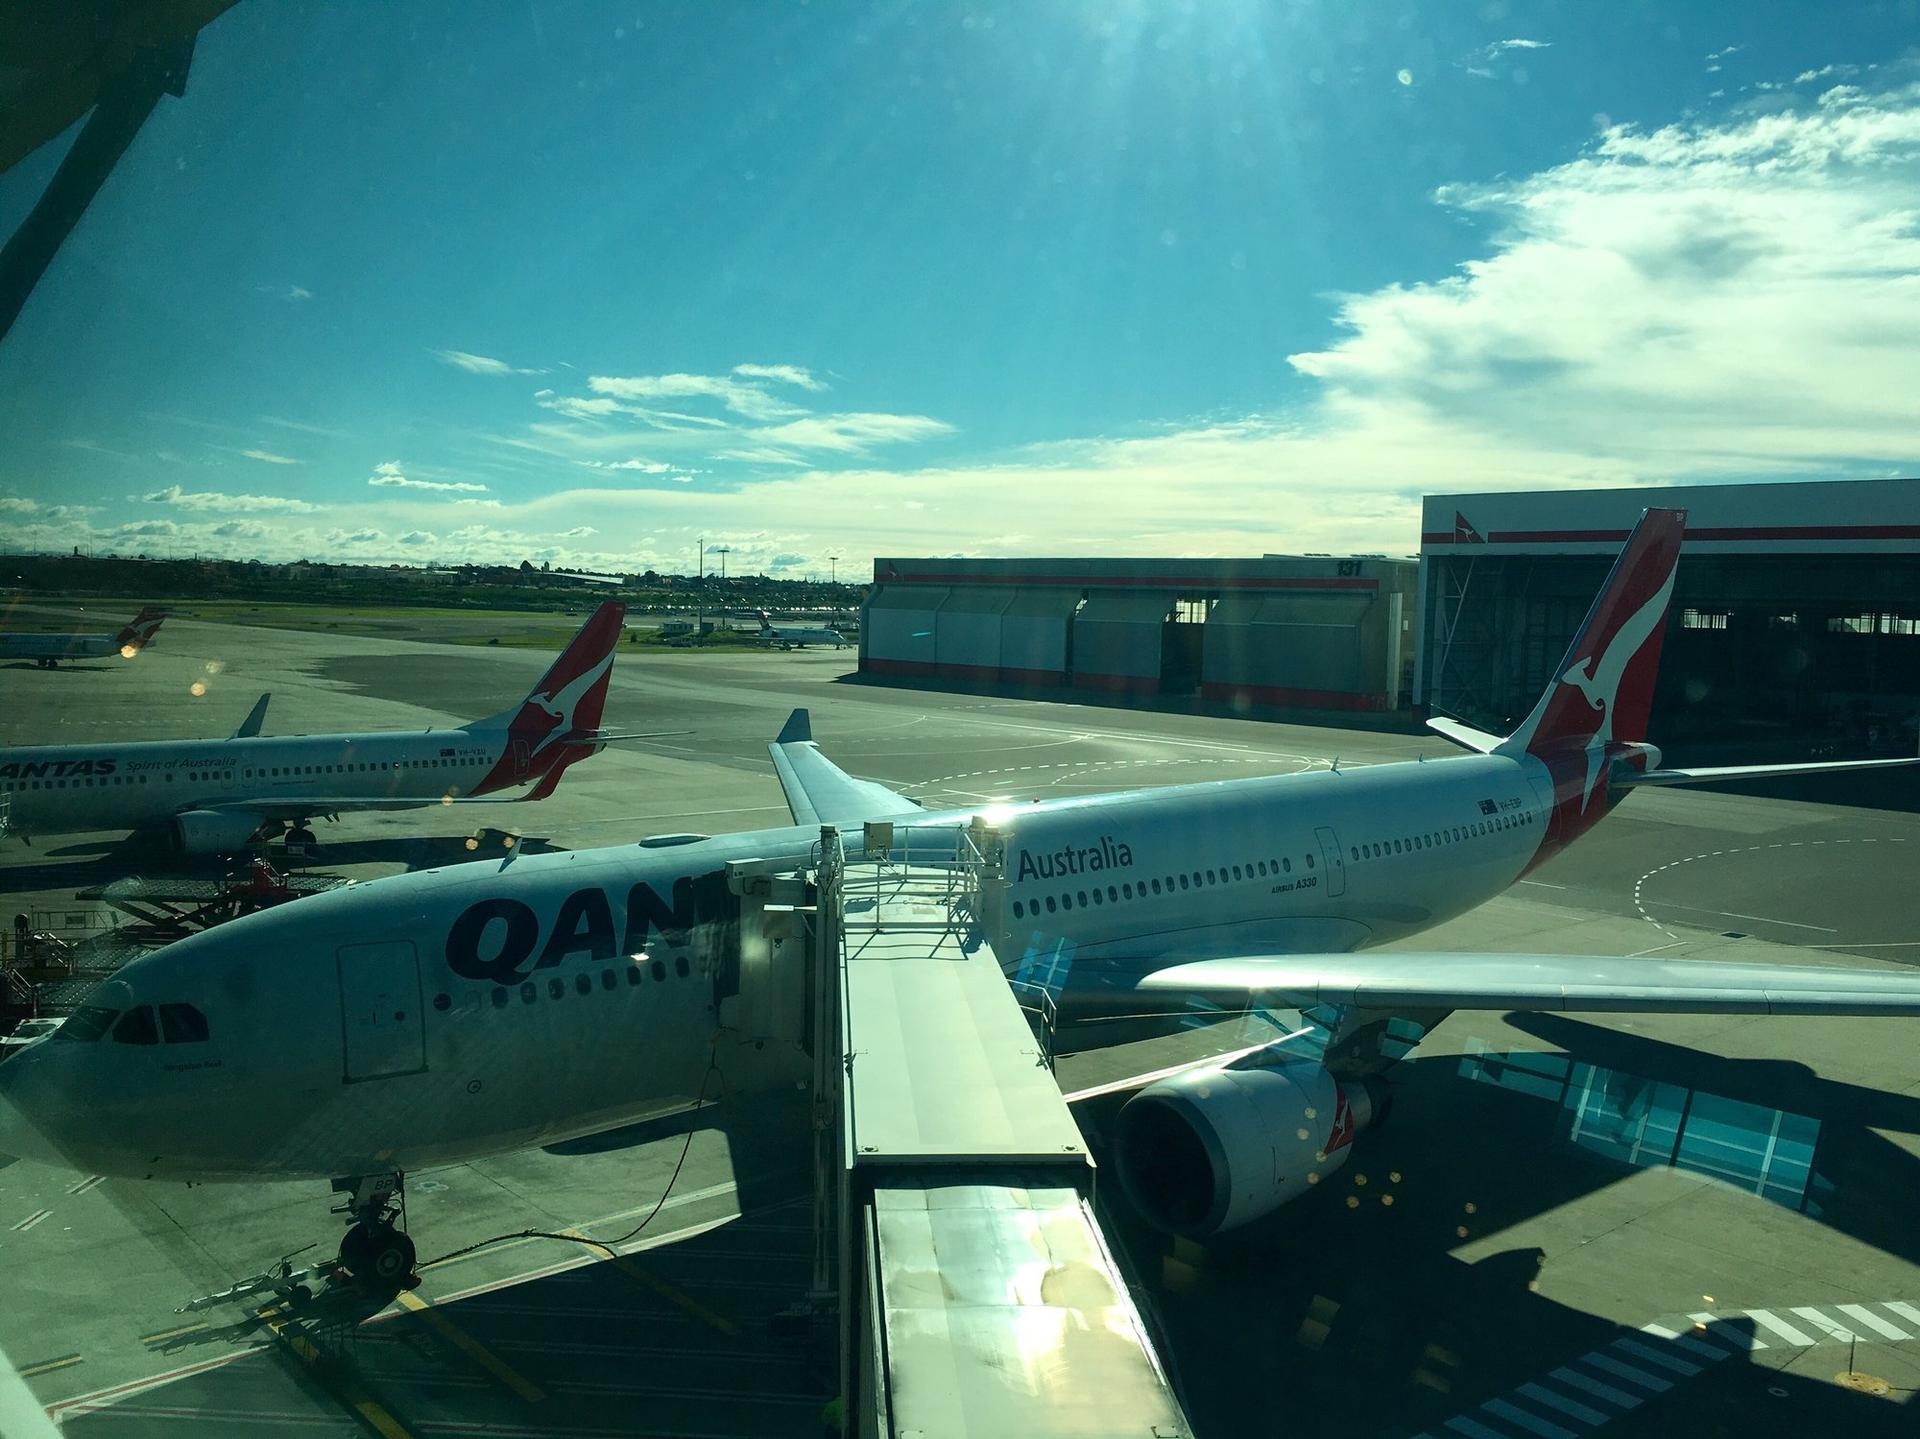 Qantas Airways Domestic Business Lounge image 11 of 16